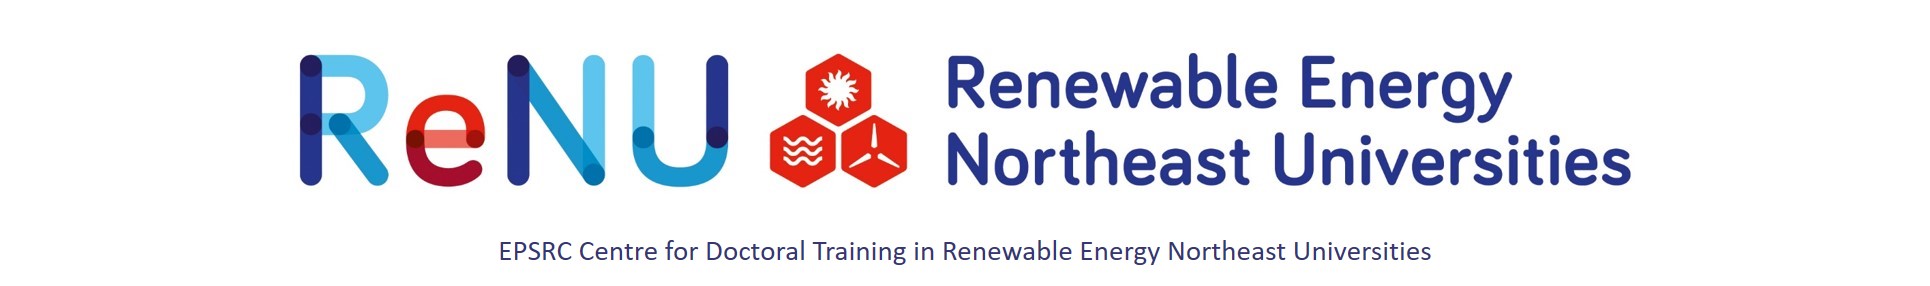 ReNU: EPSRC Centre for Doctoral Training in Renewable Energy Northeast Universities